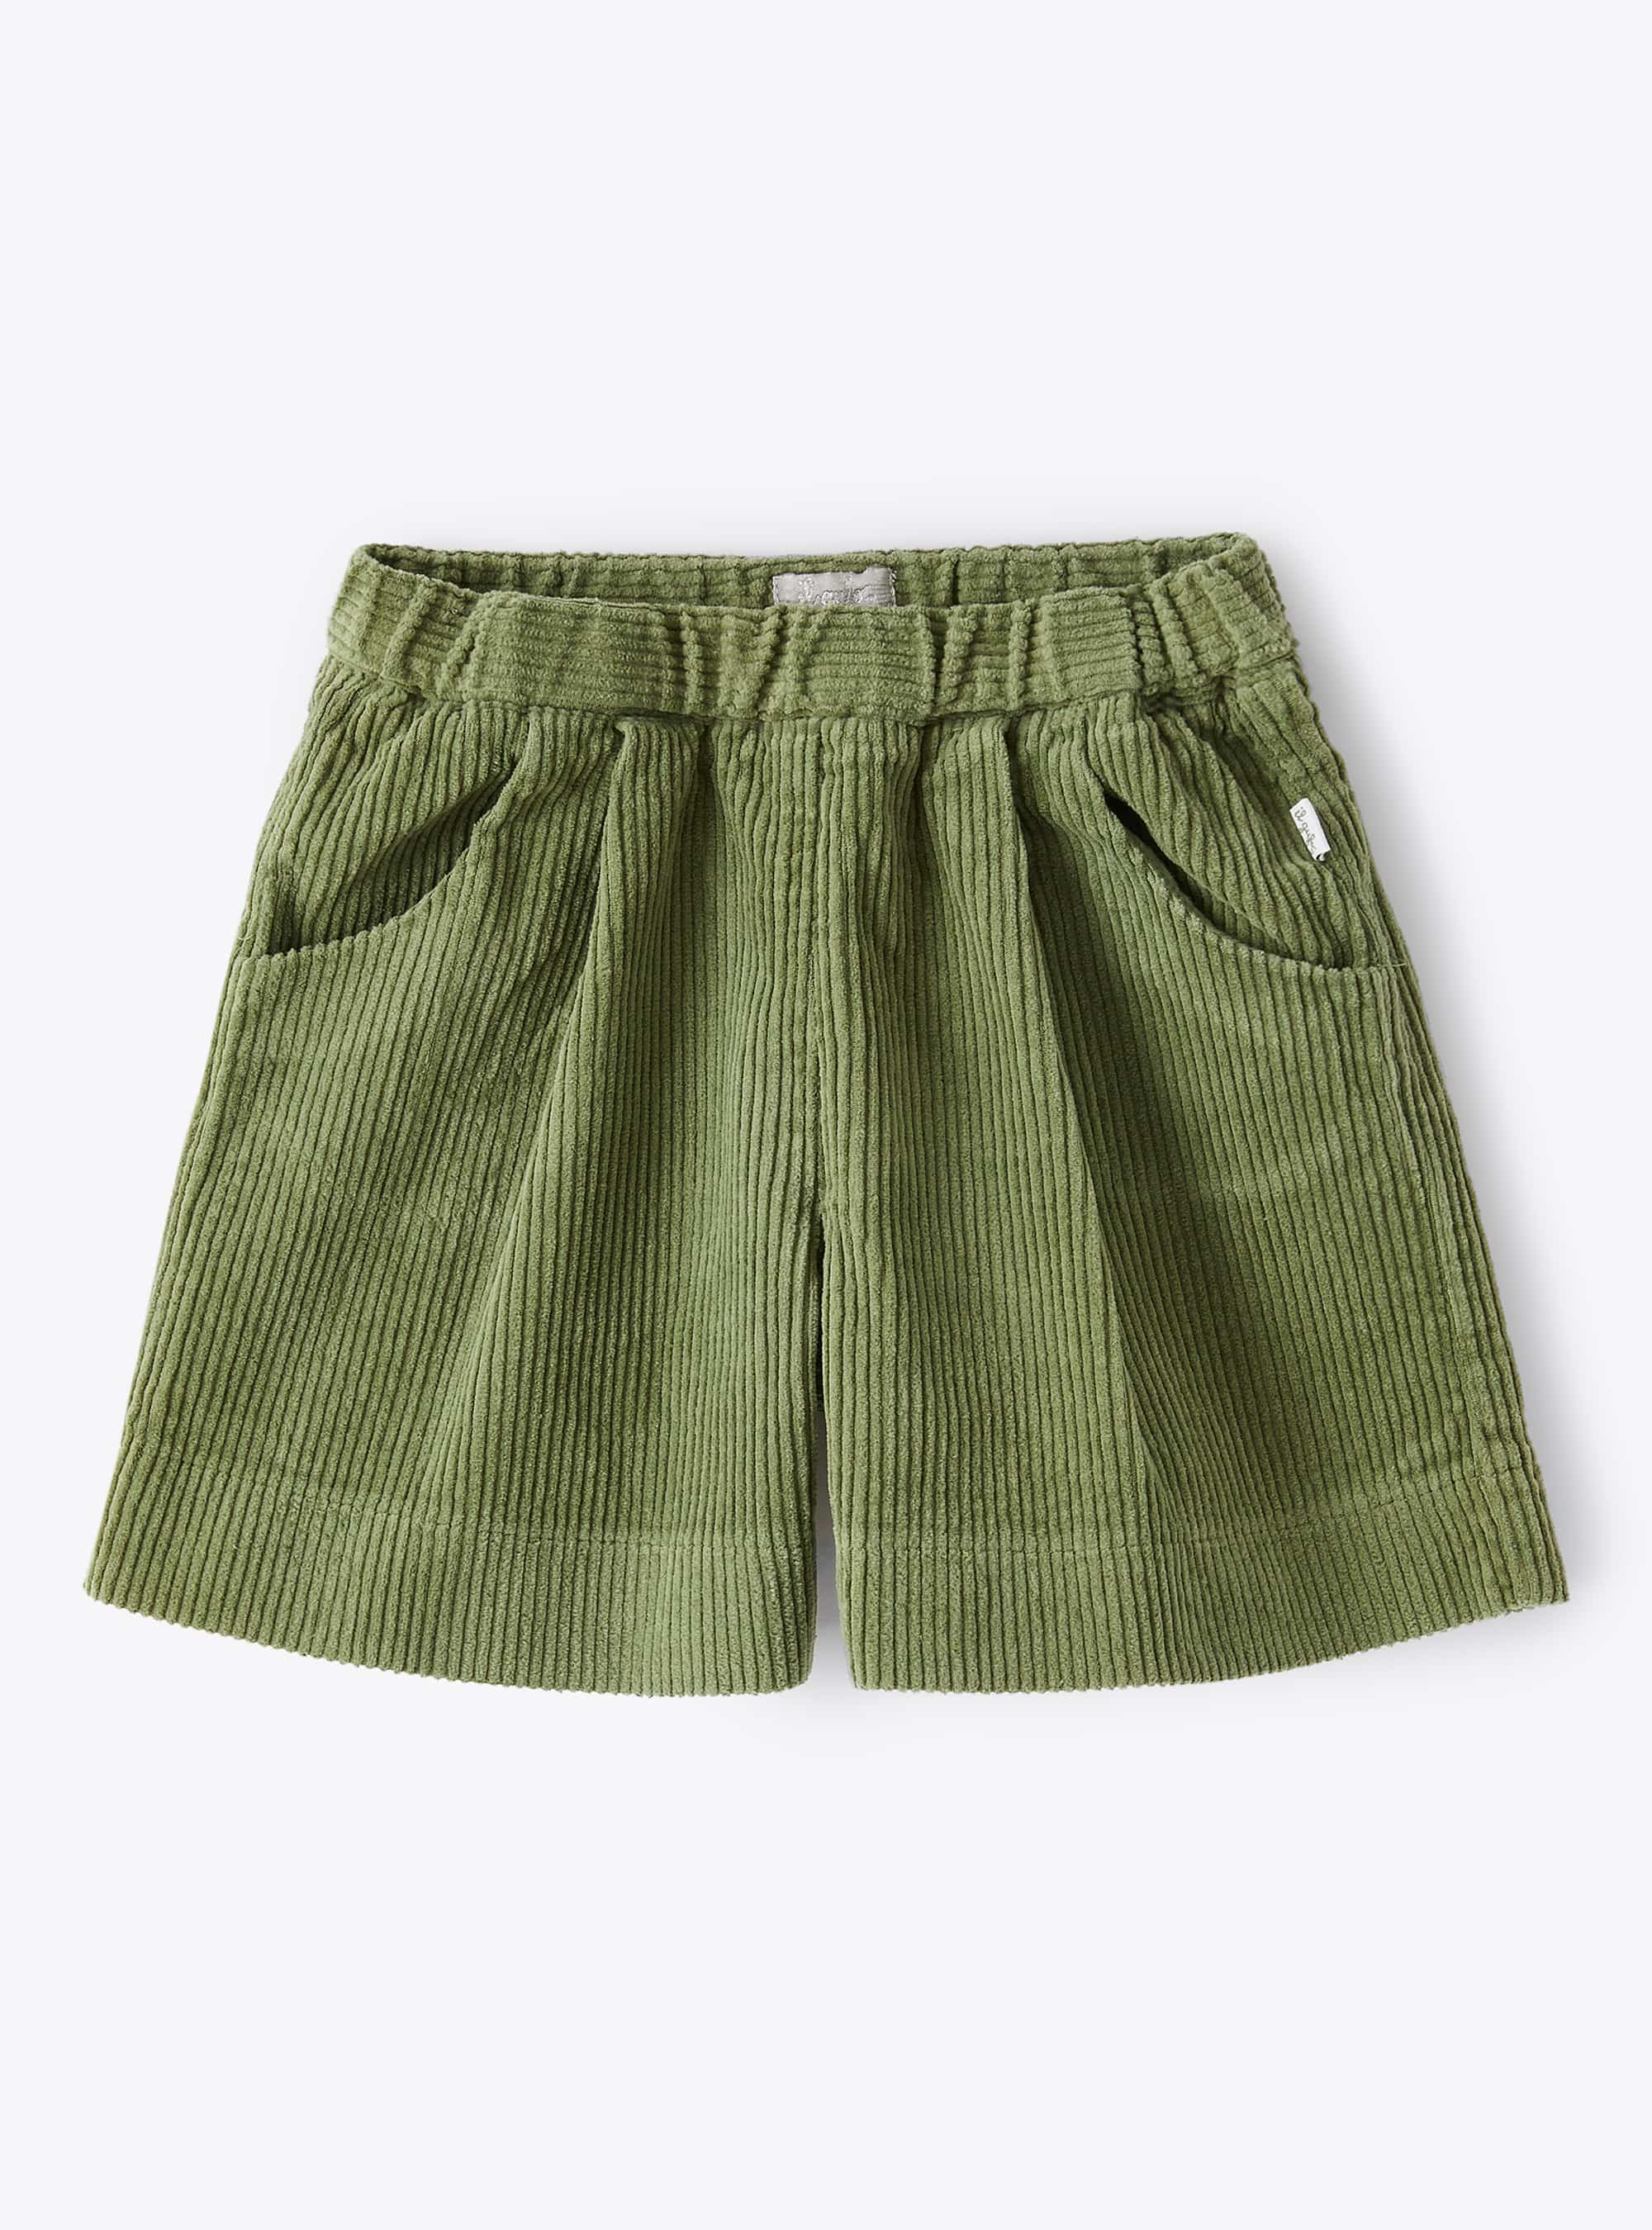 Green corduroy shorts - Trousers - Il Gufo